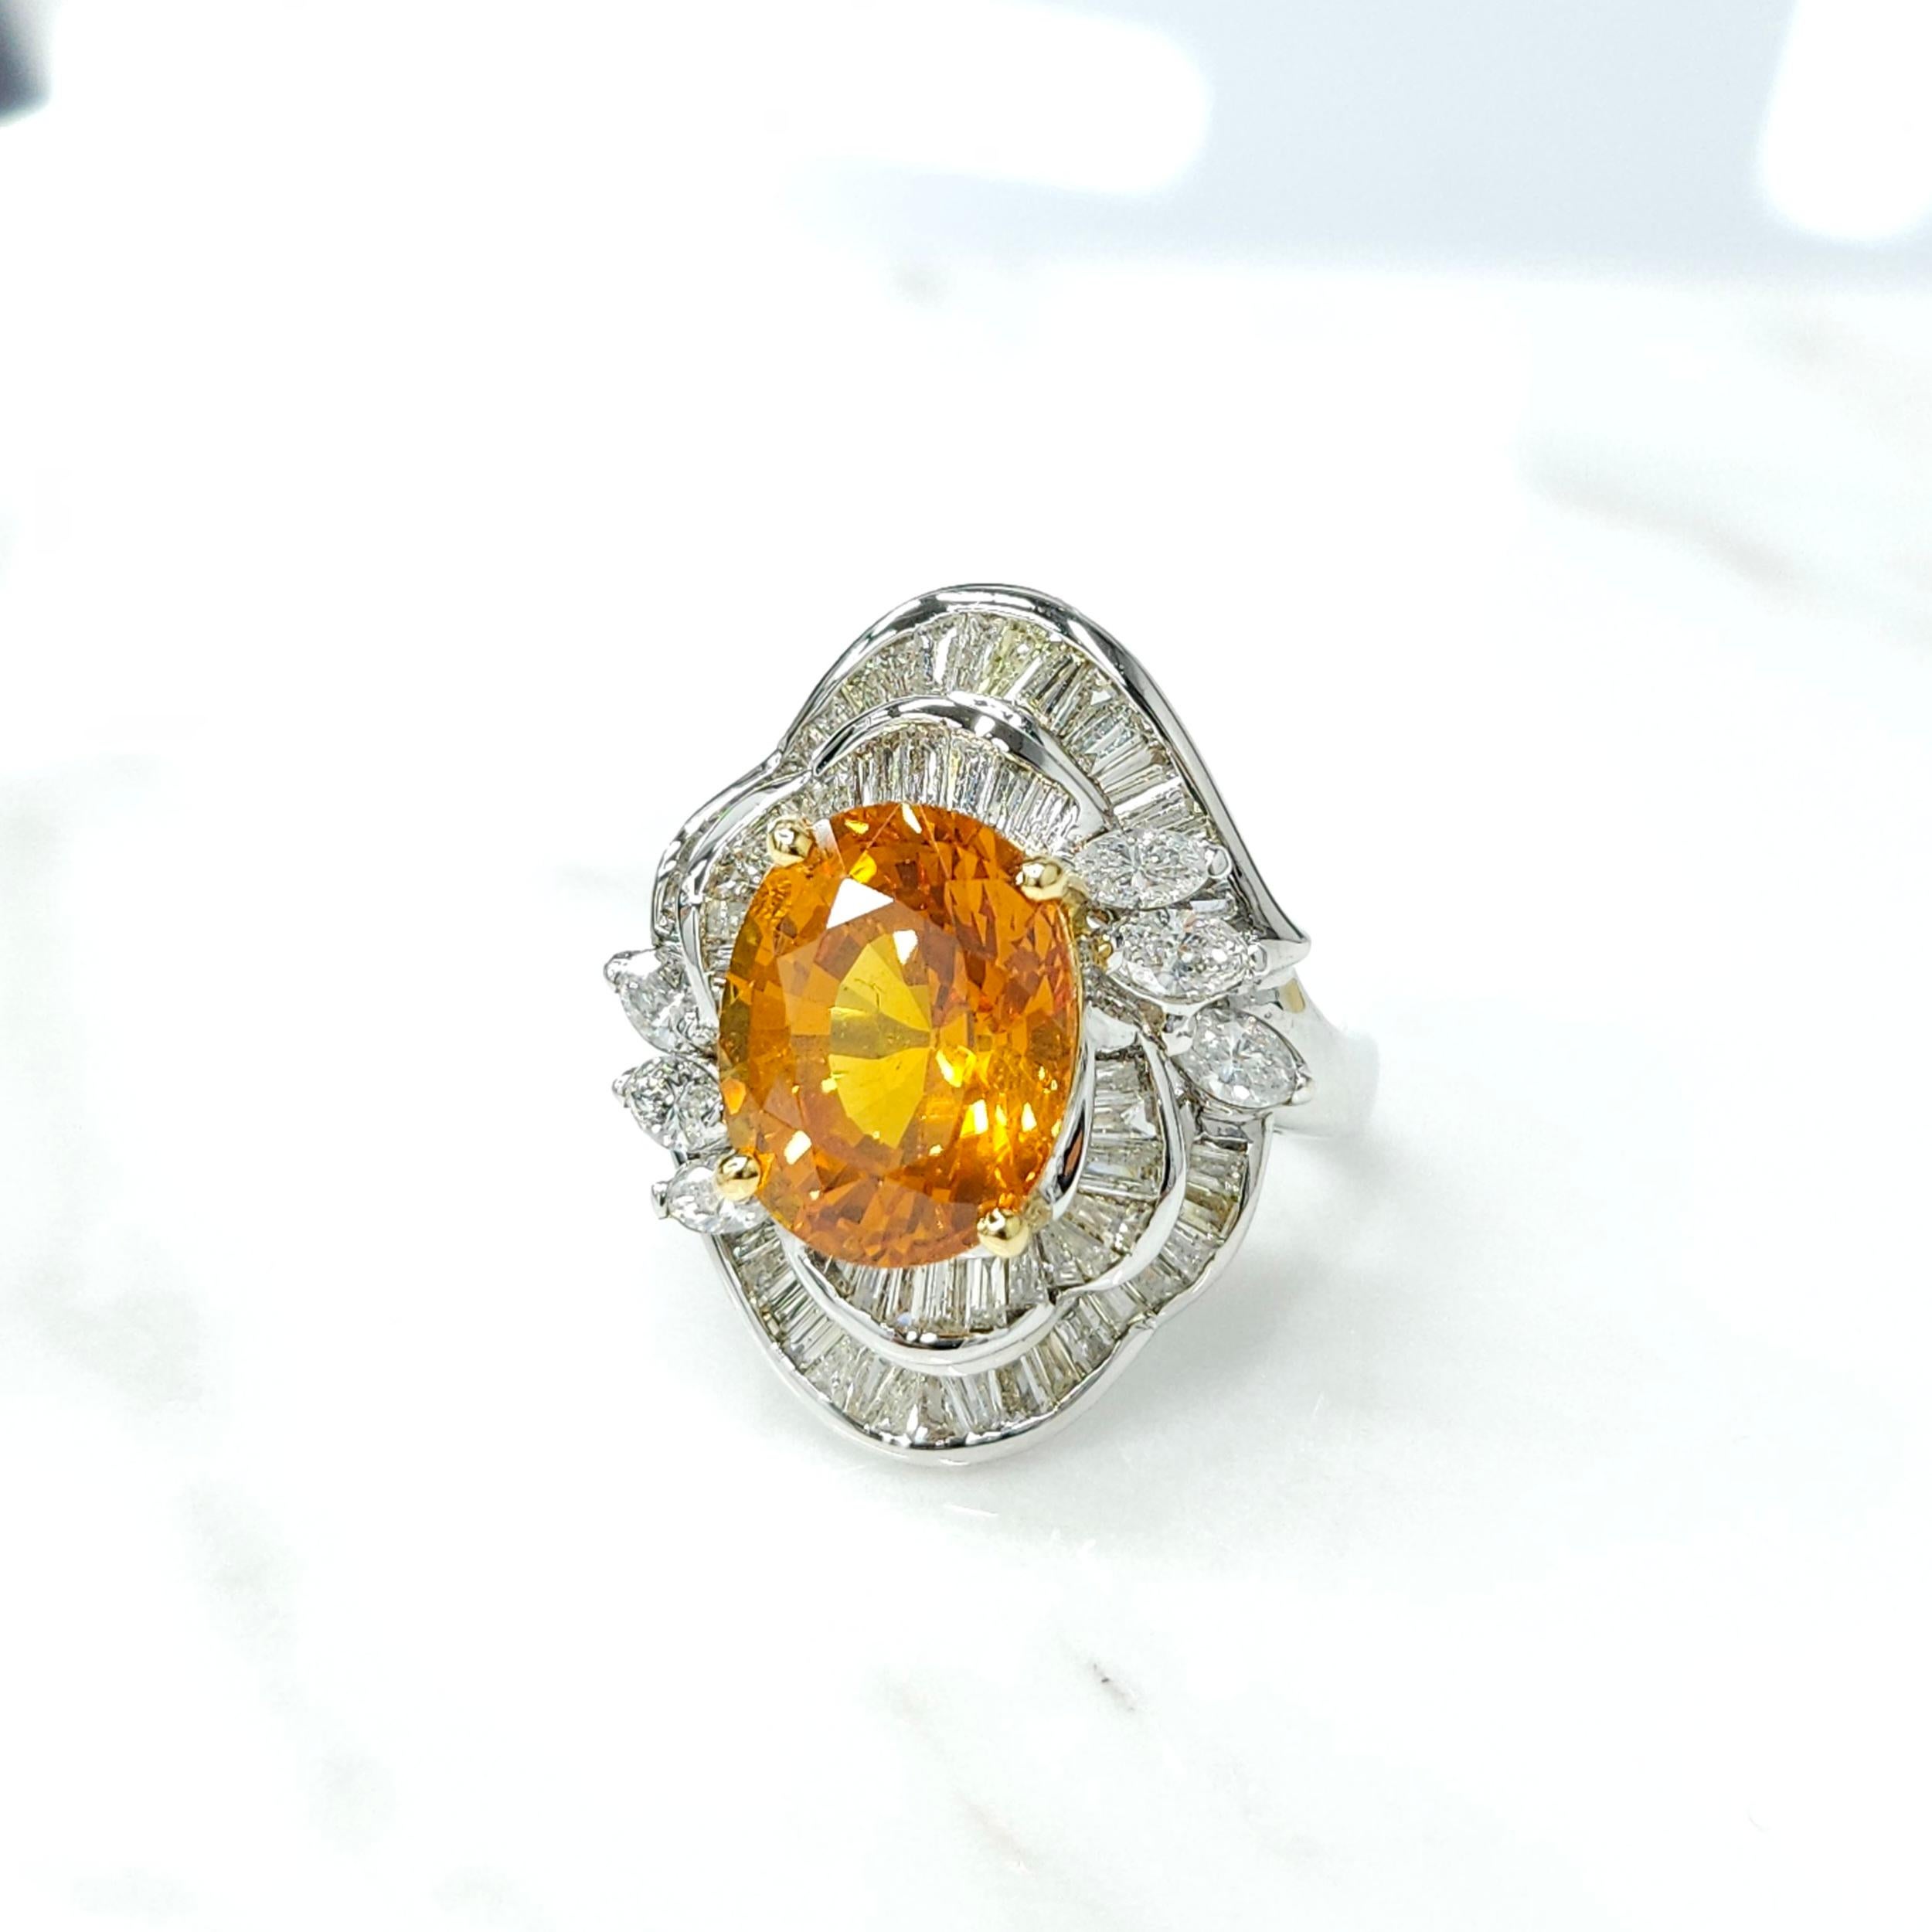 IGI Certified 6.08Carat Ceylon Orange Sapphire & Diamond Ring in 18K White Gold For Sale 3